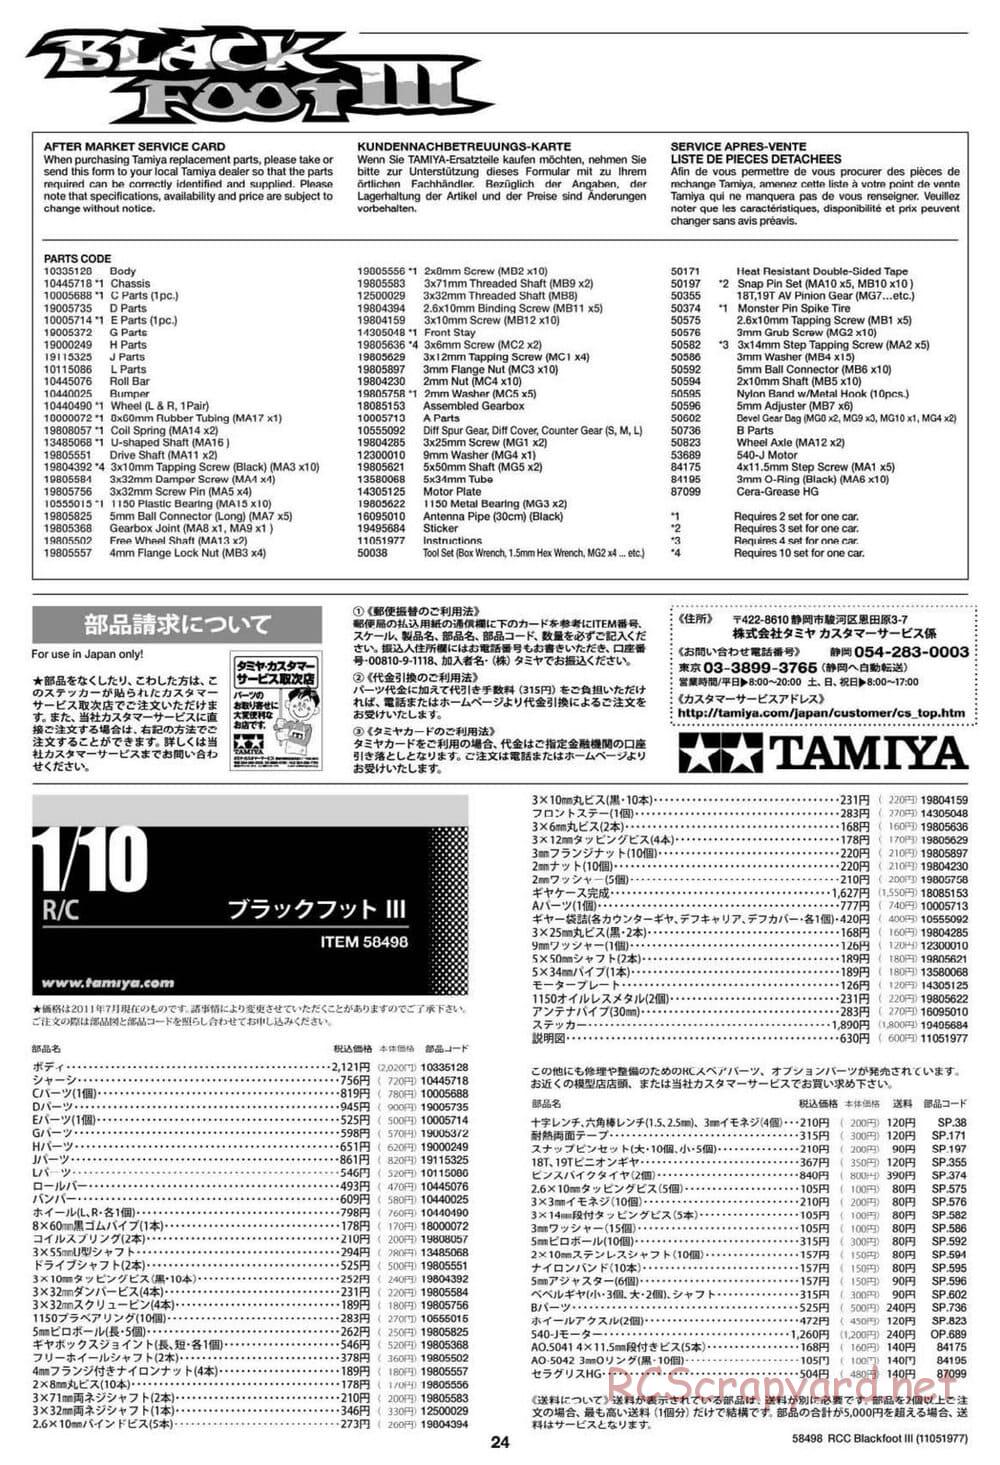 Tamiya - Blackfoot III - WT-01 Chassis - Manual - Page 24